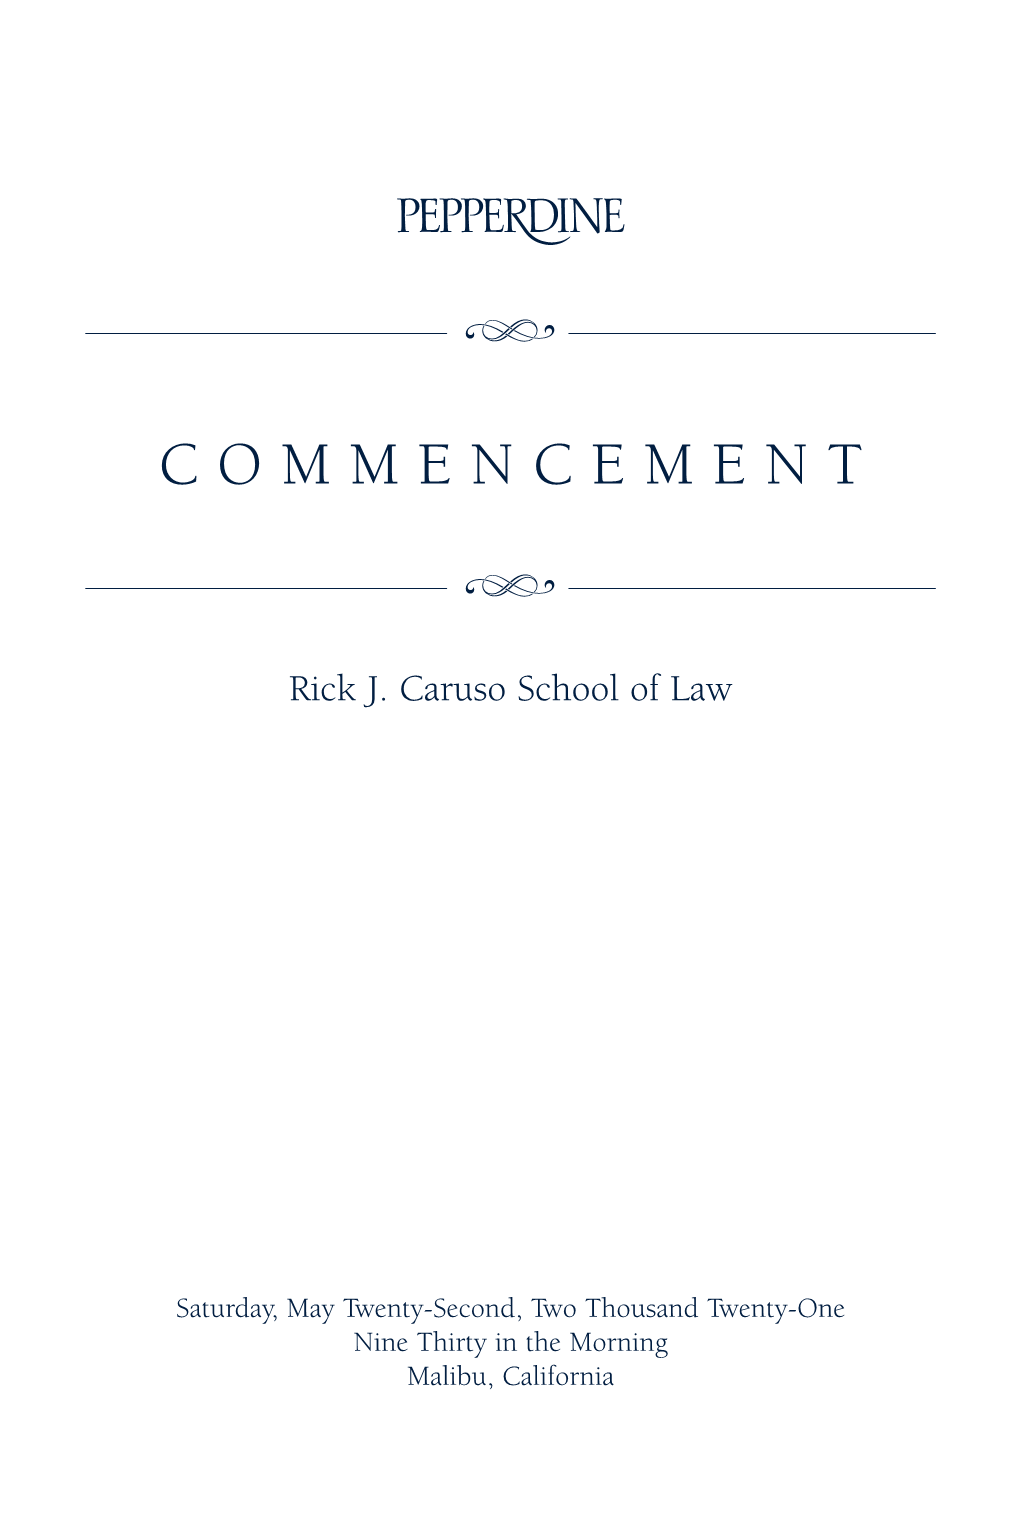 Rick J. Caruso School of Law 2020 Commencement Program